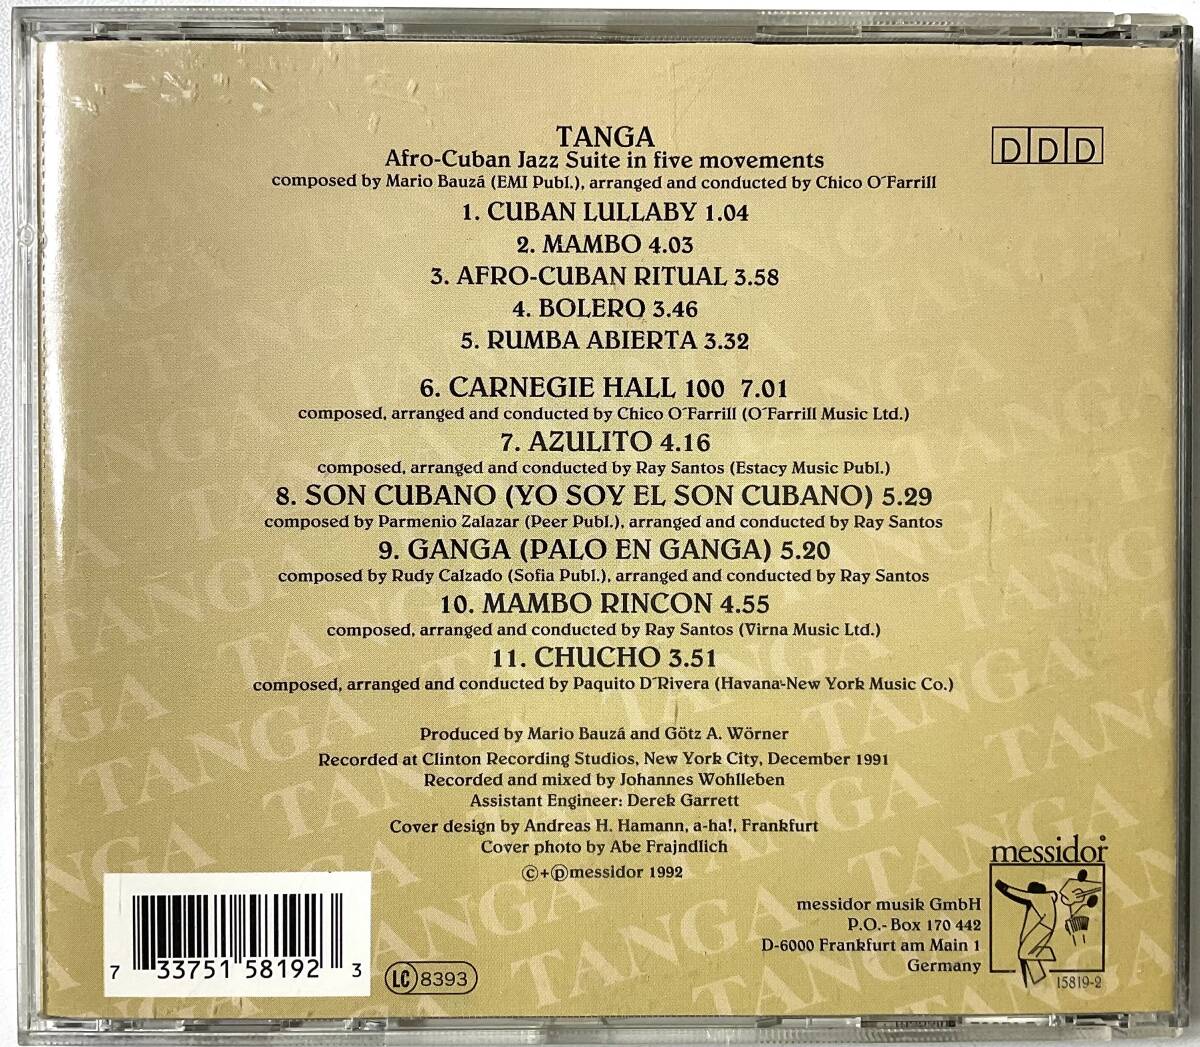 RARE CD Mario Bauza And His Afro-Cuban Jazz Orchestra Tanga GERMANY 1992 Messidor 158192 LICCA*RECORDS 340_画像4